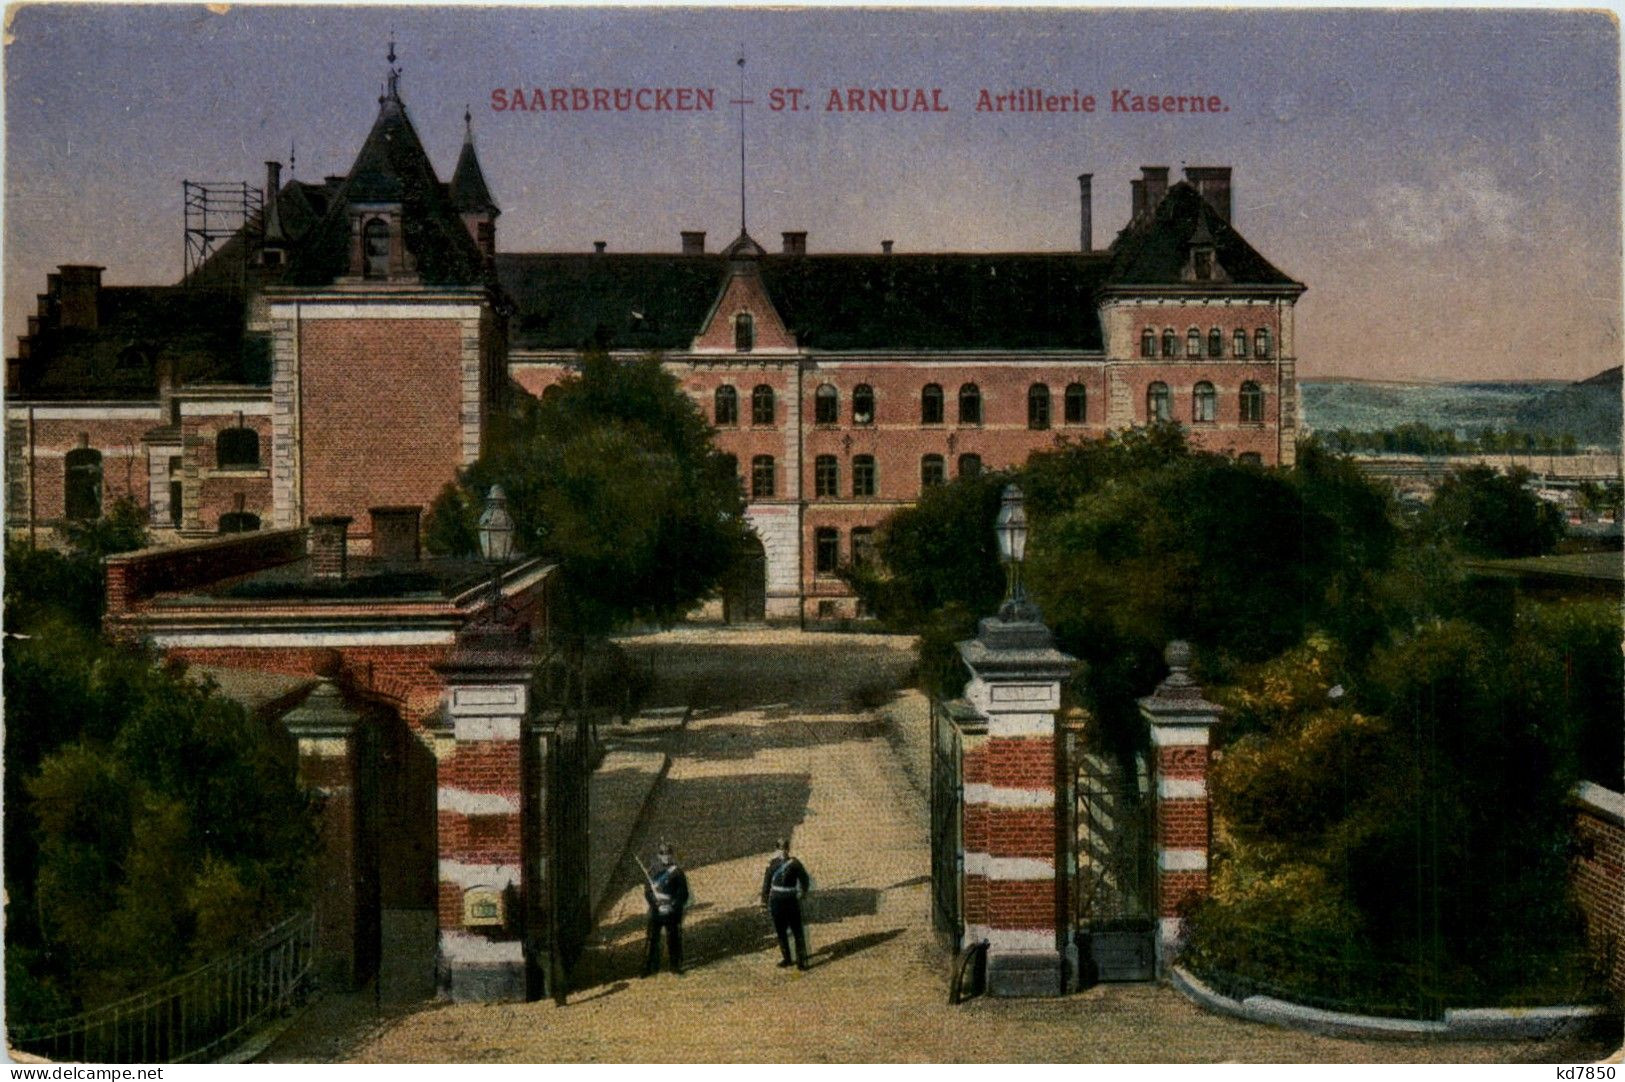 Saarbrücken - St. Arnual Artillerie Kaserne - Saarbruecken